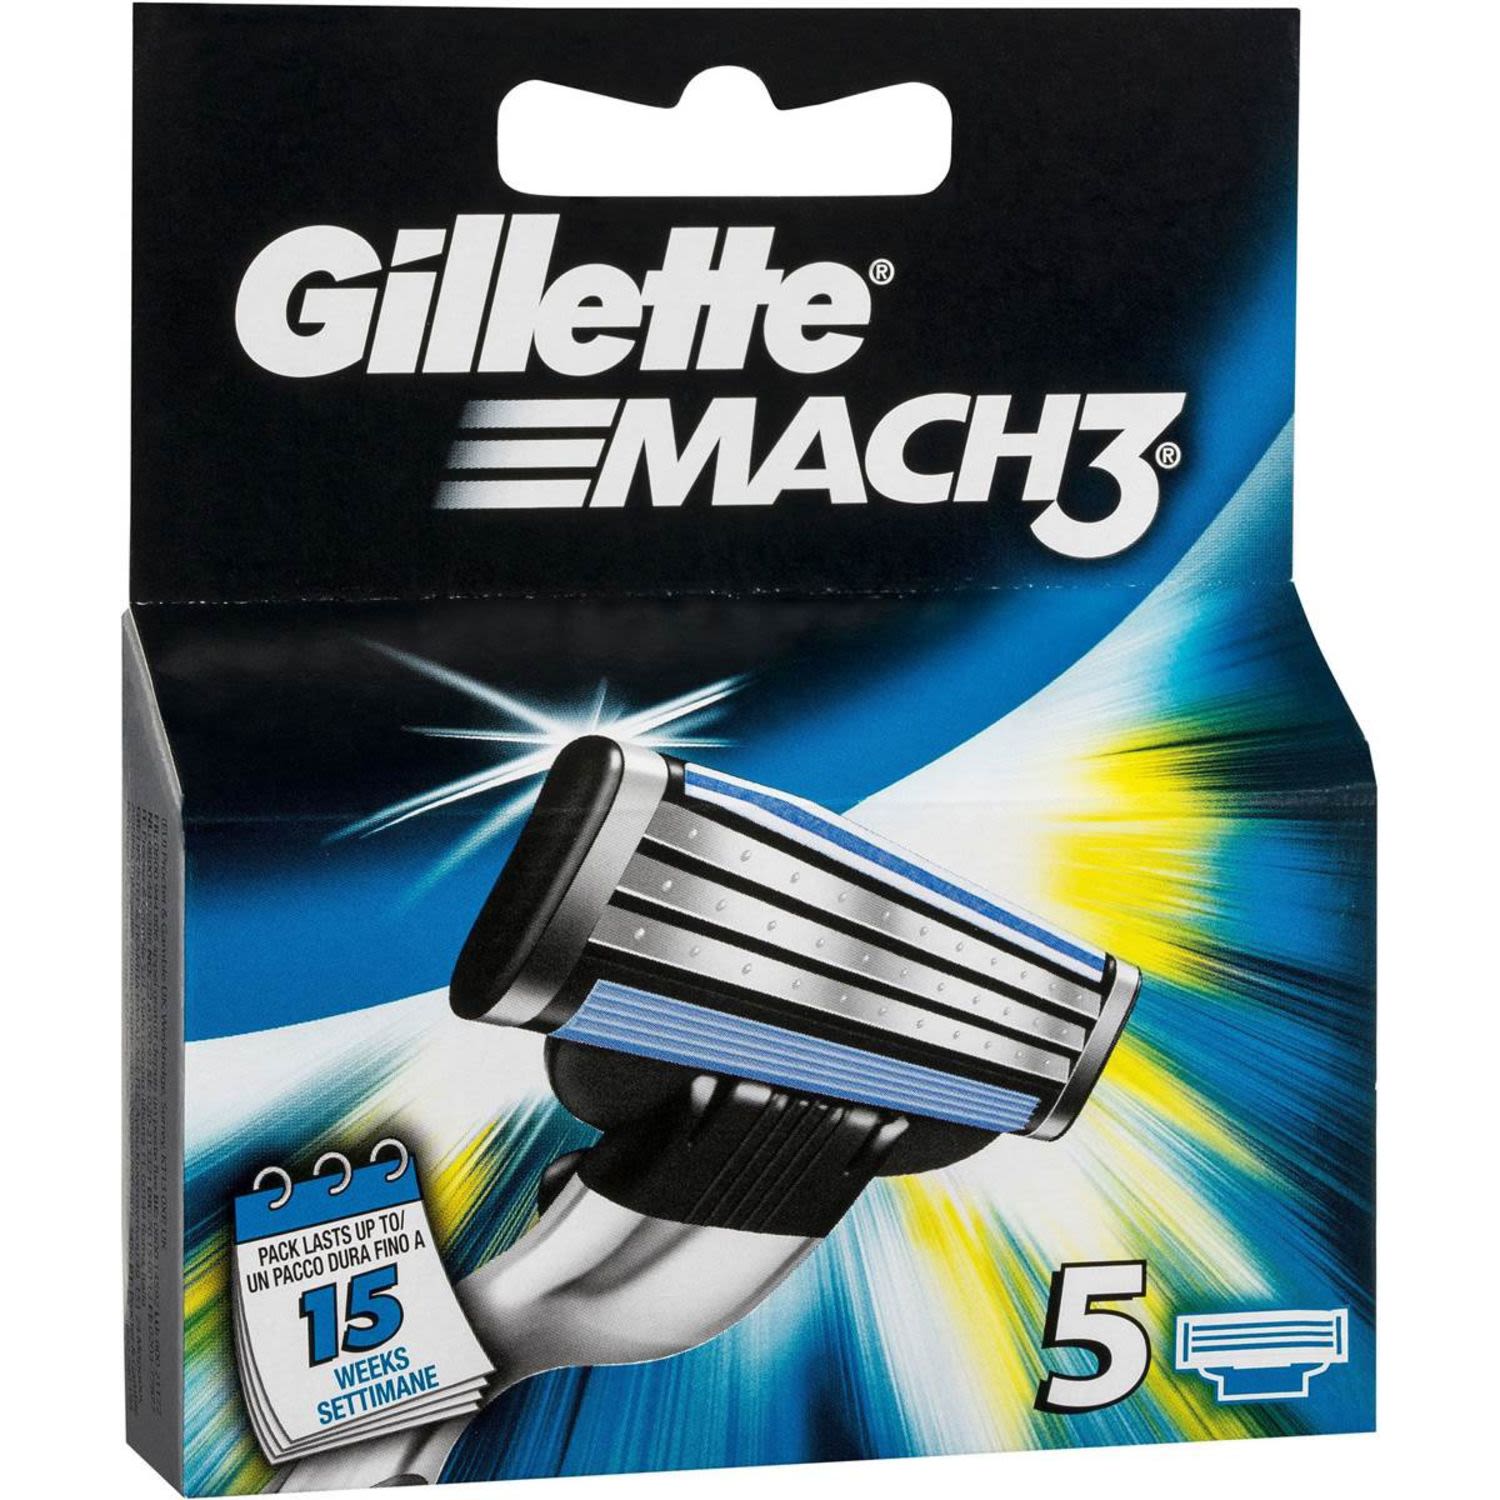 Gillette Mach 3 Shaving Blade Refill, 5 Each